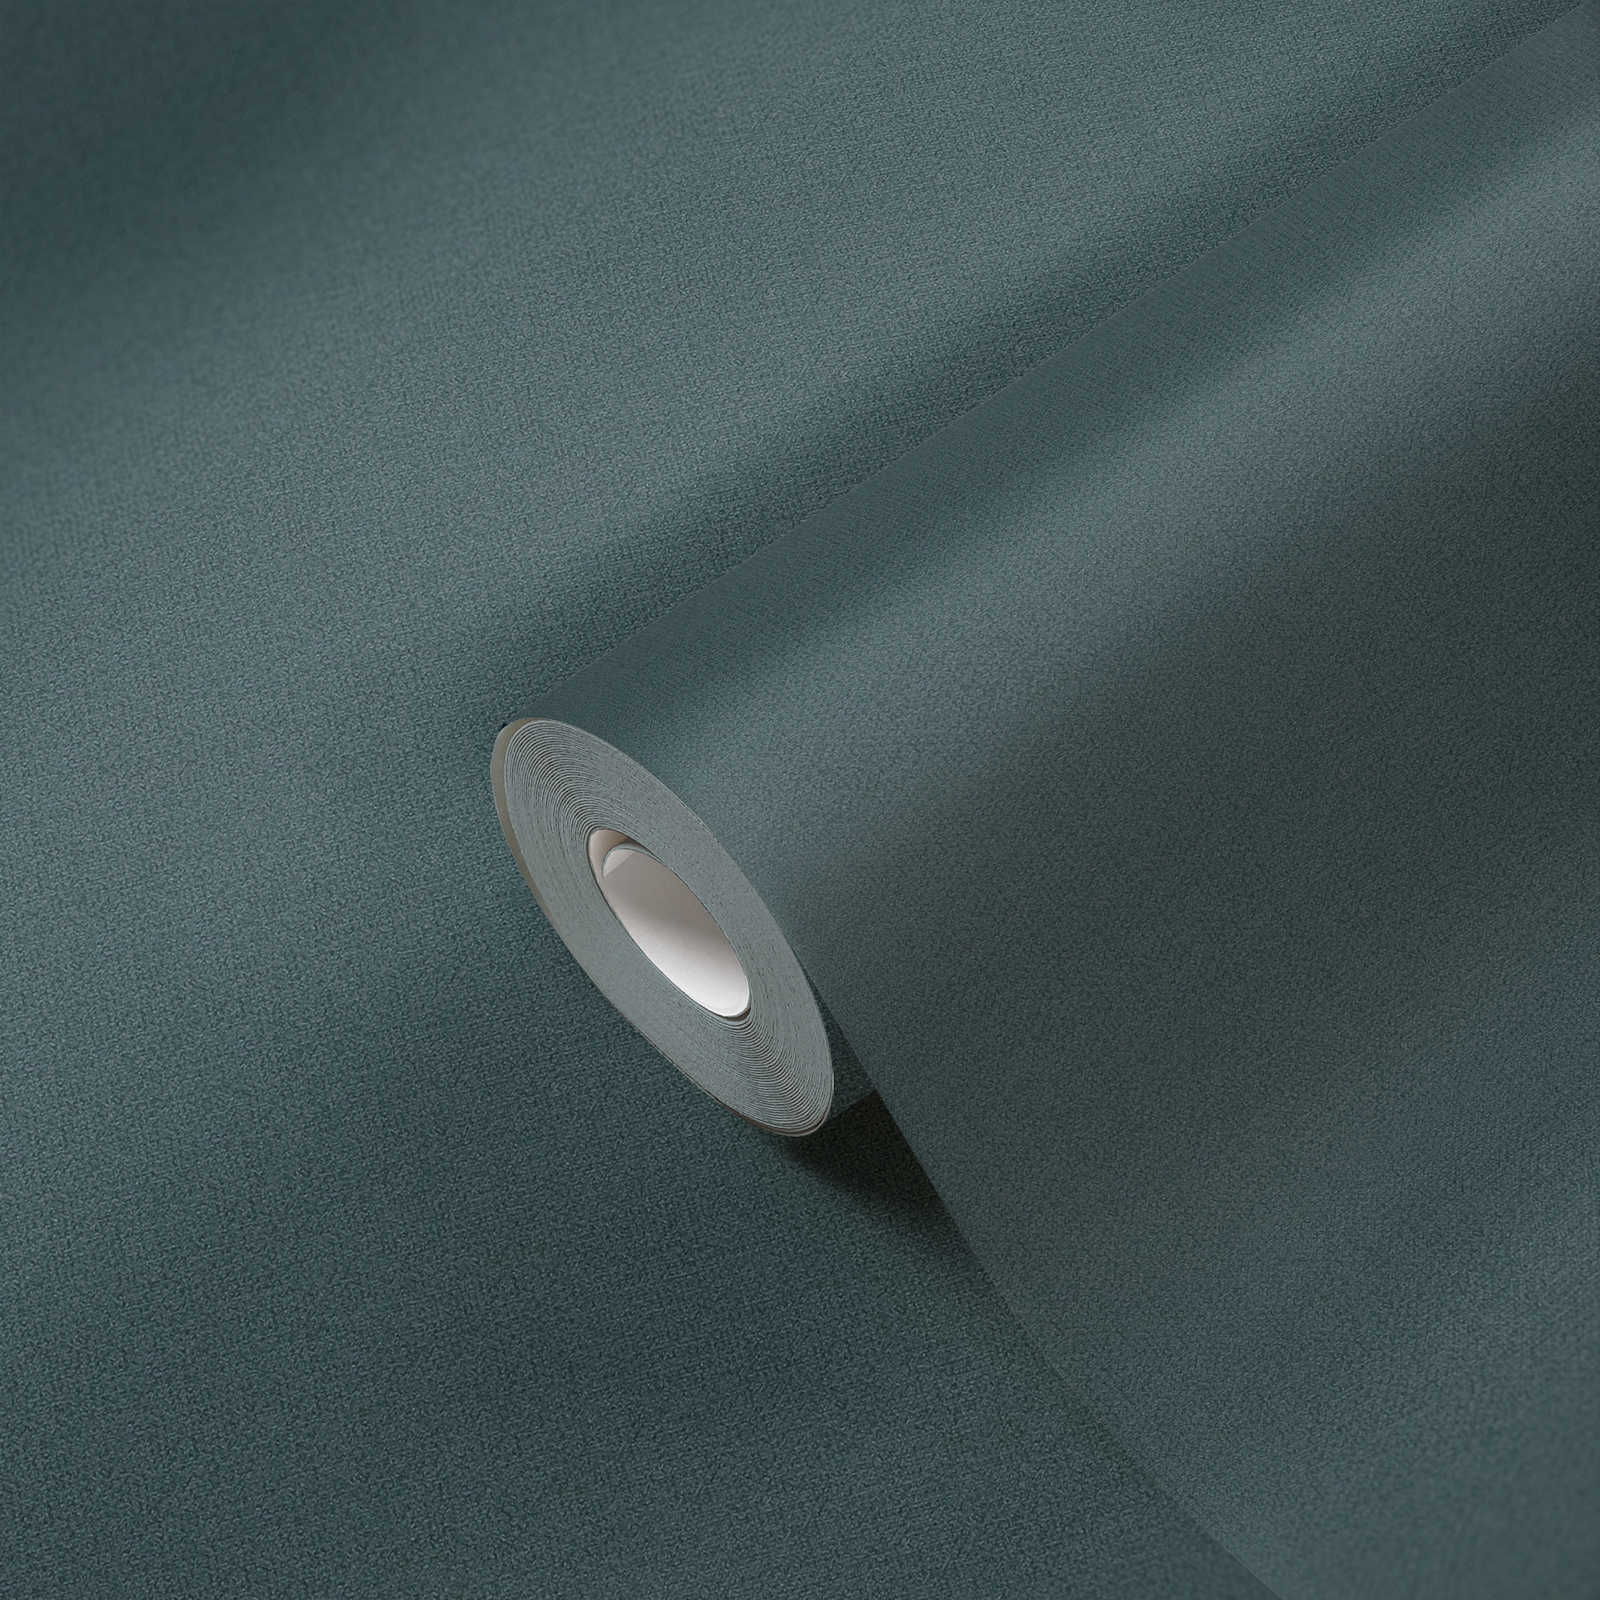             Einfarbige Vliestapete mit Leinenoptik PVC-frei – Blau, Grau
        